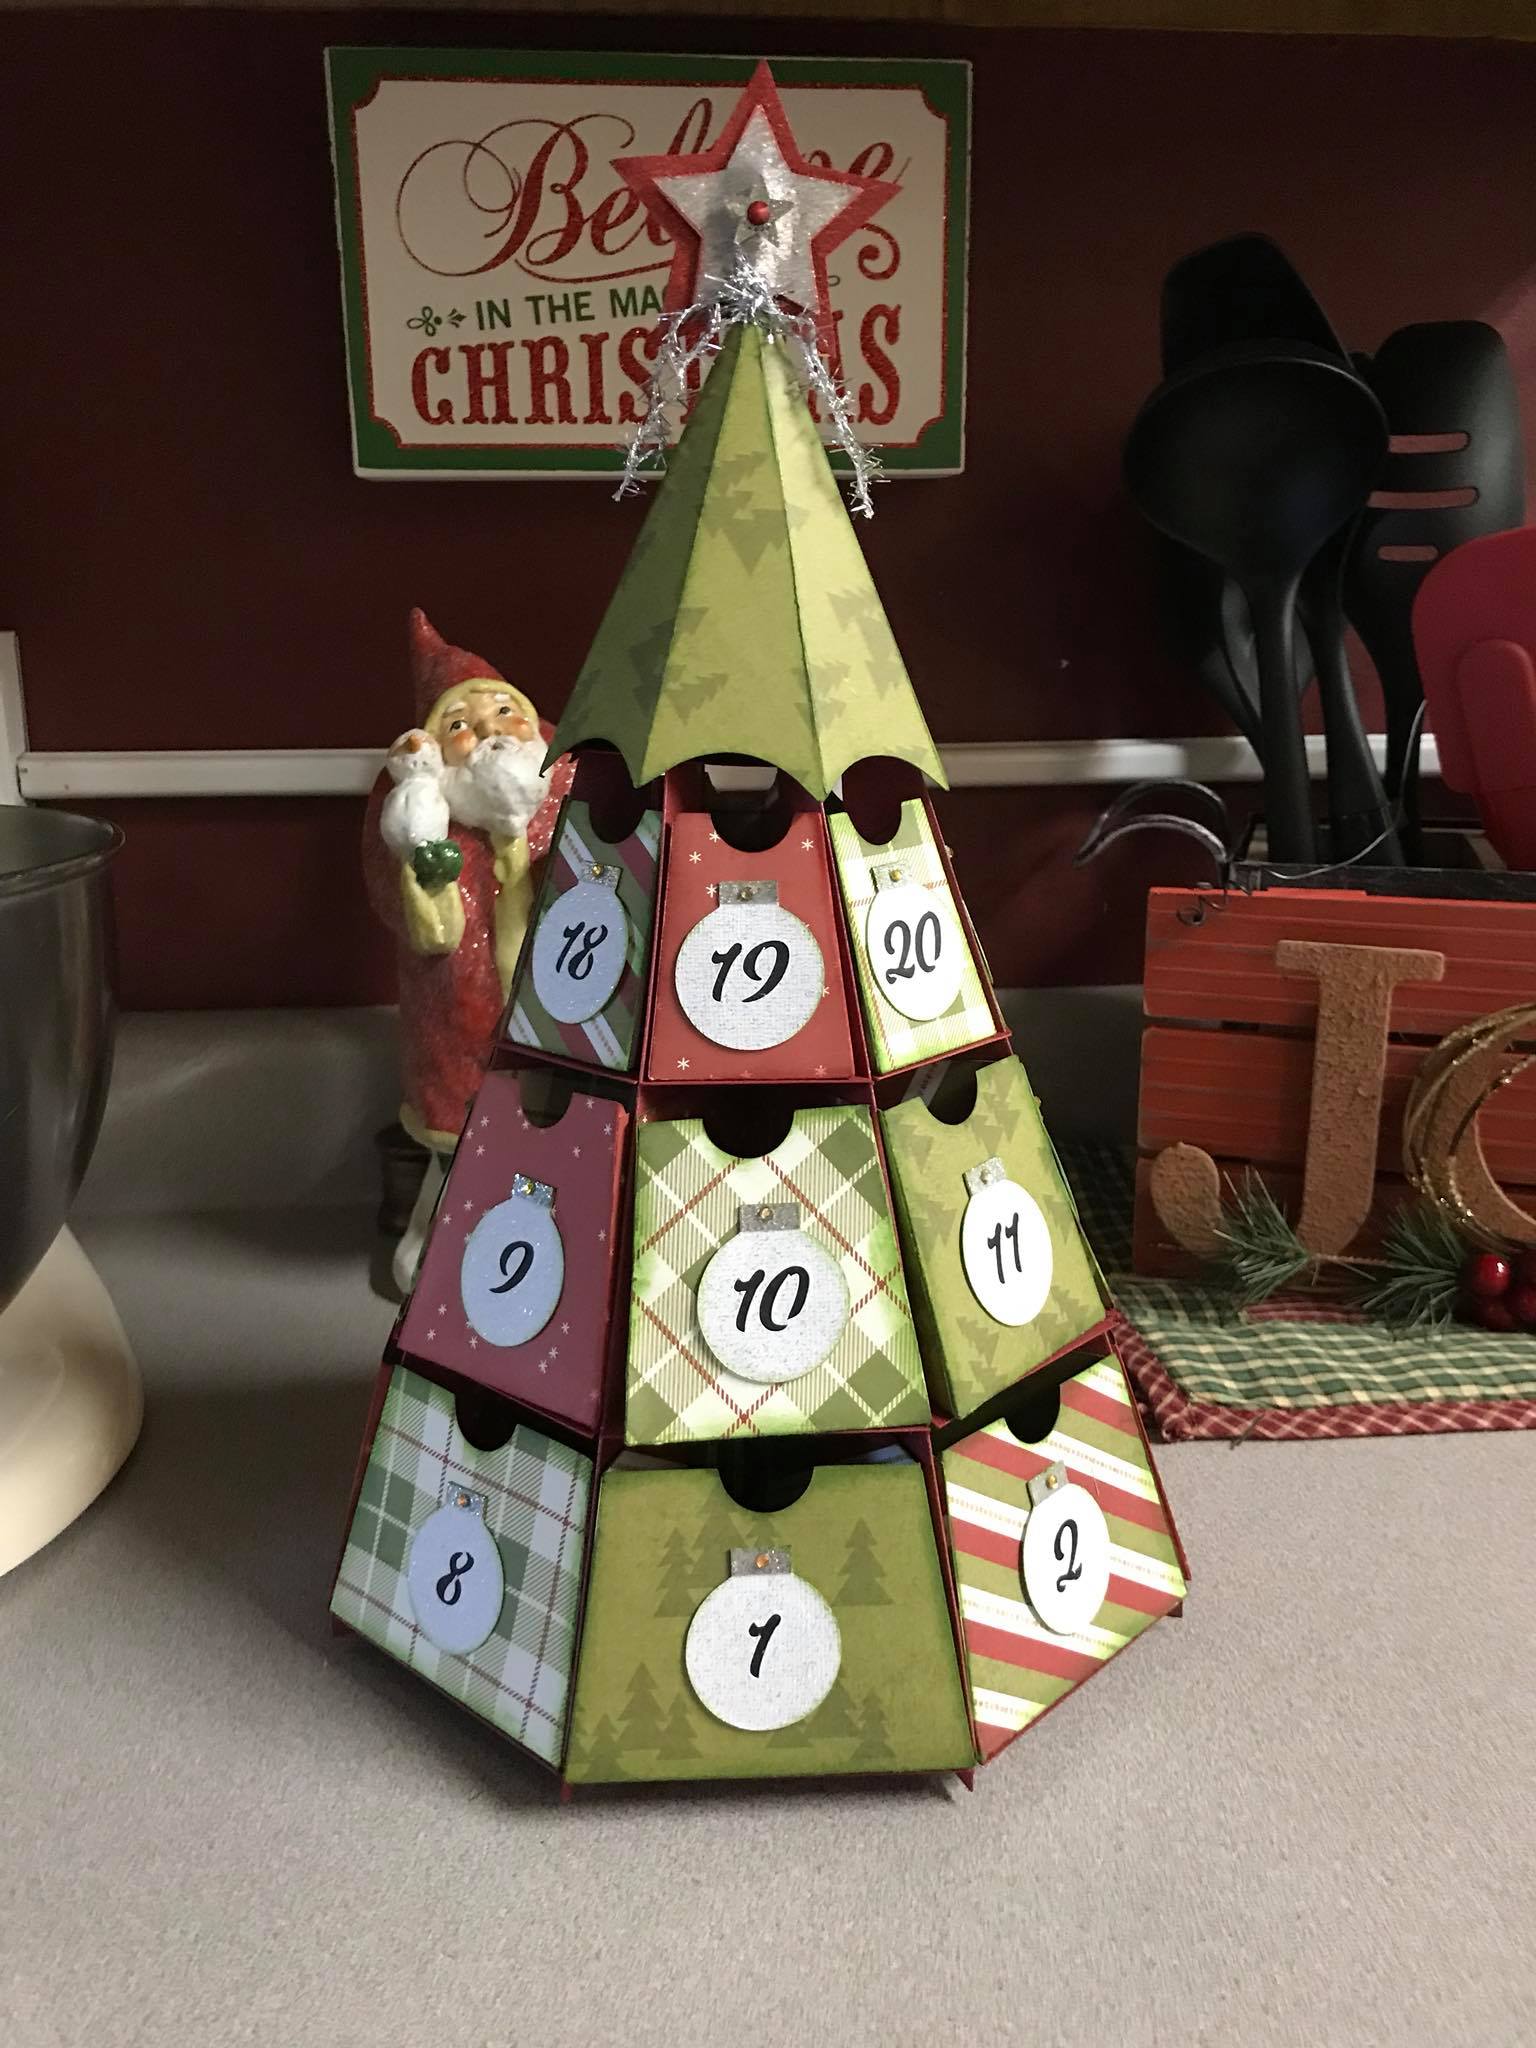 christmas-tree-advent-calendar-25-days-of-maker-projects-jennifer-maker